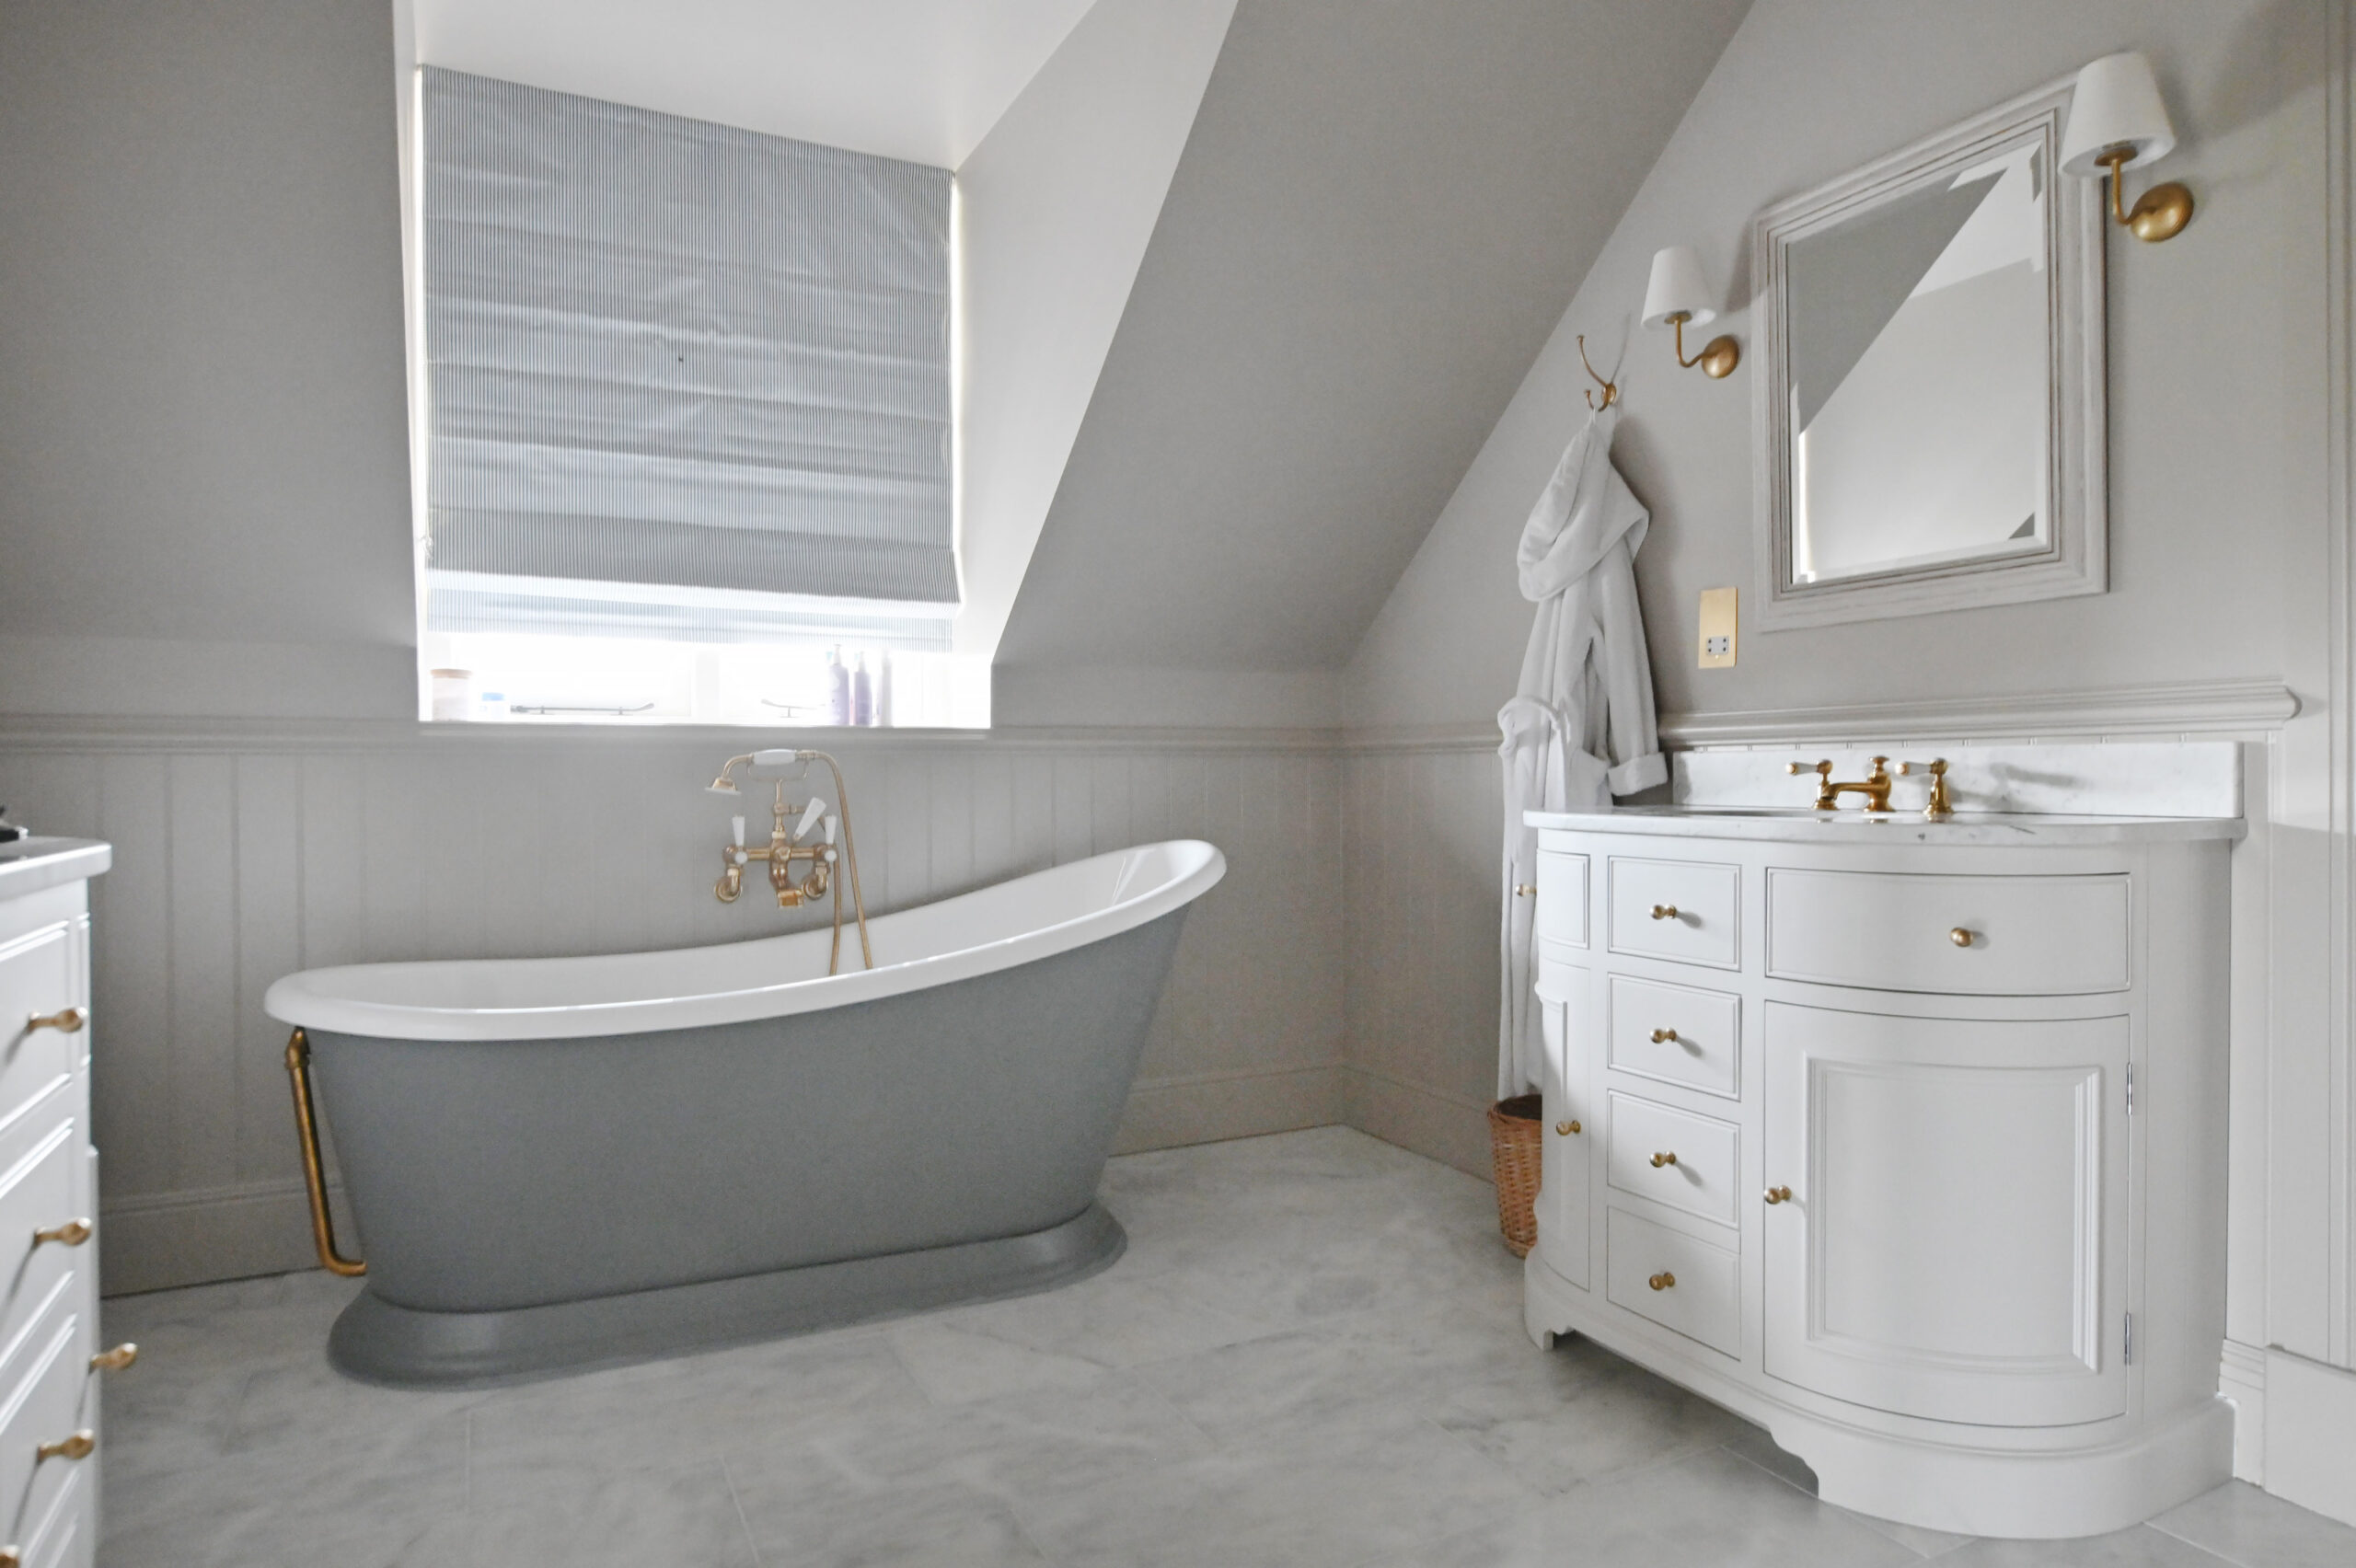 New Bathroom Design - Home Renovation and Extension, Marlborough